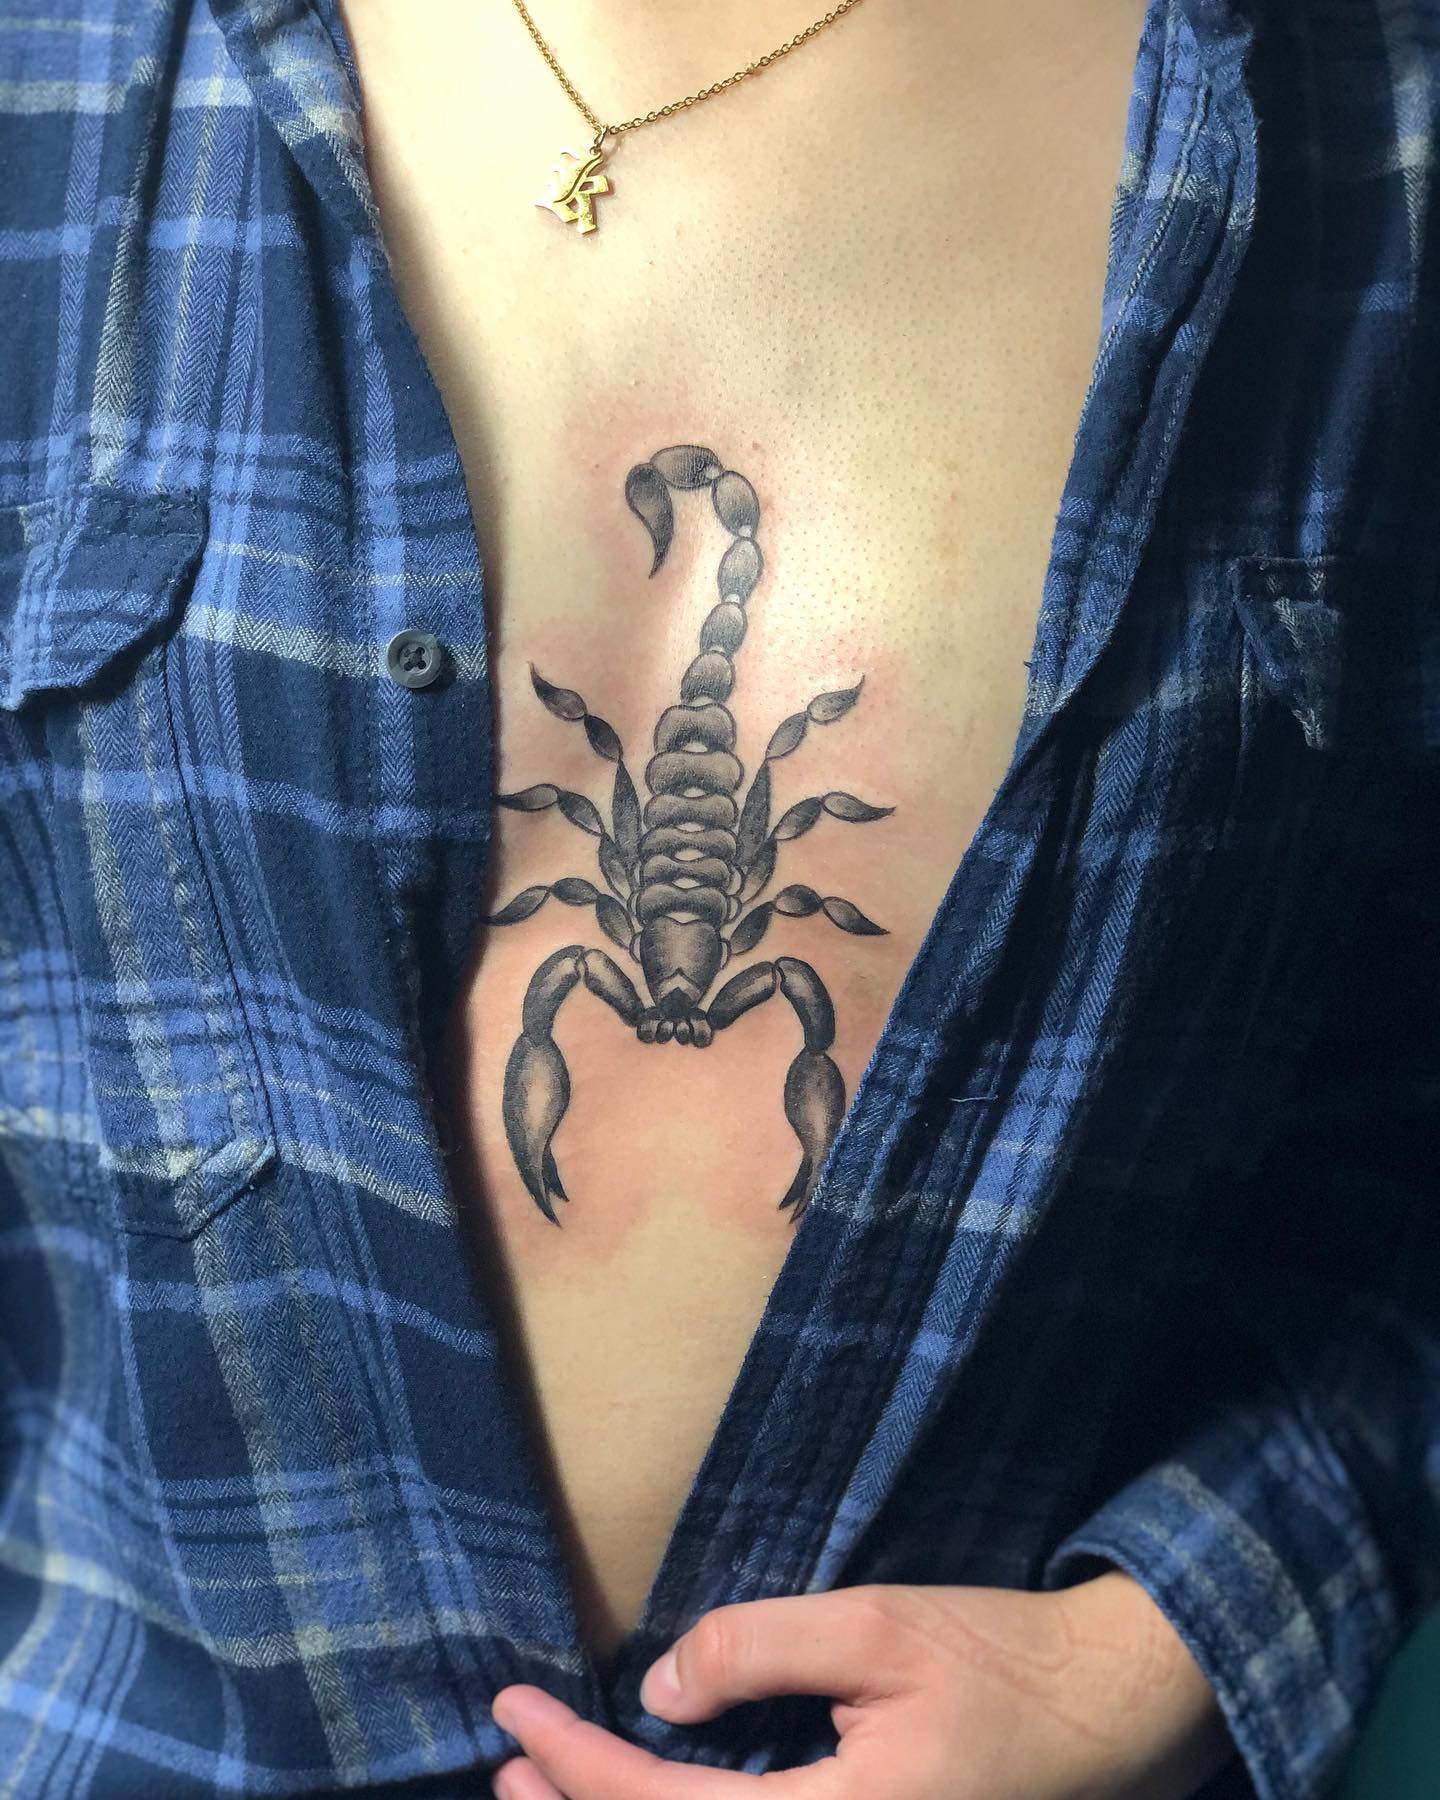 Tatuaje del esternón de escorpión.